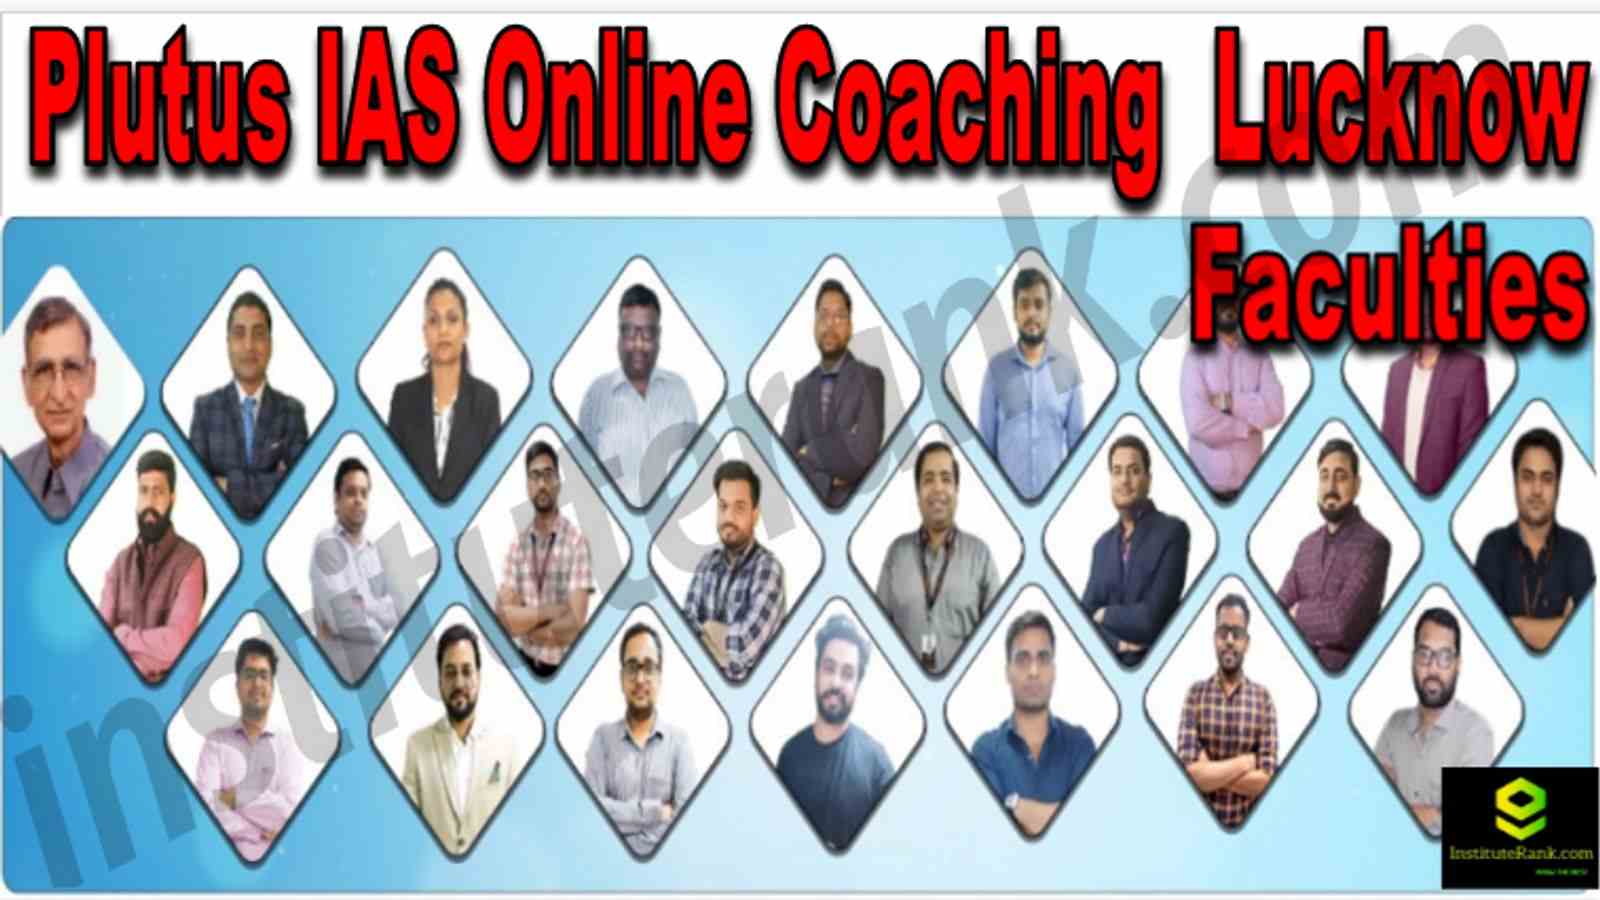 Plutus IAS Online Coaching Lucknow Reviews Faculties